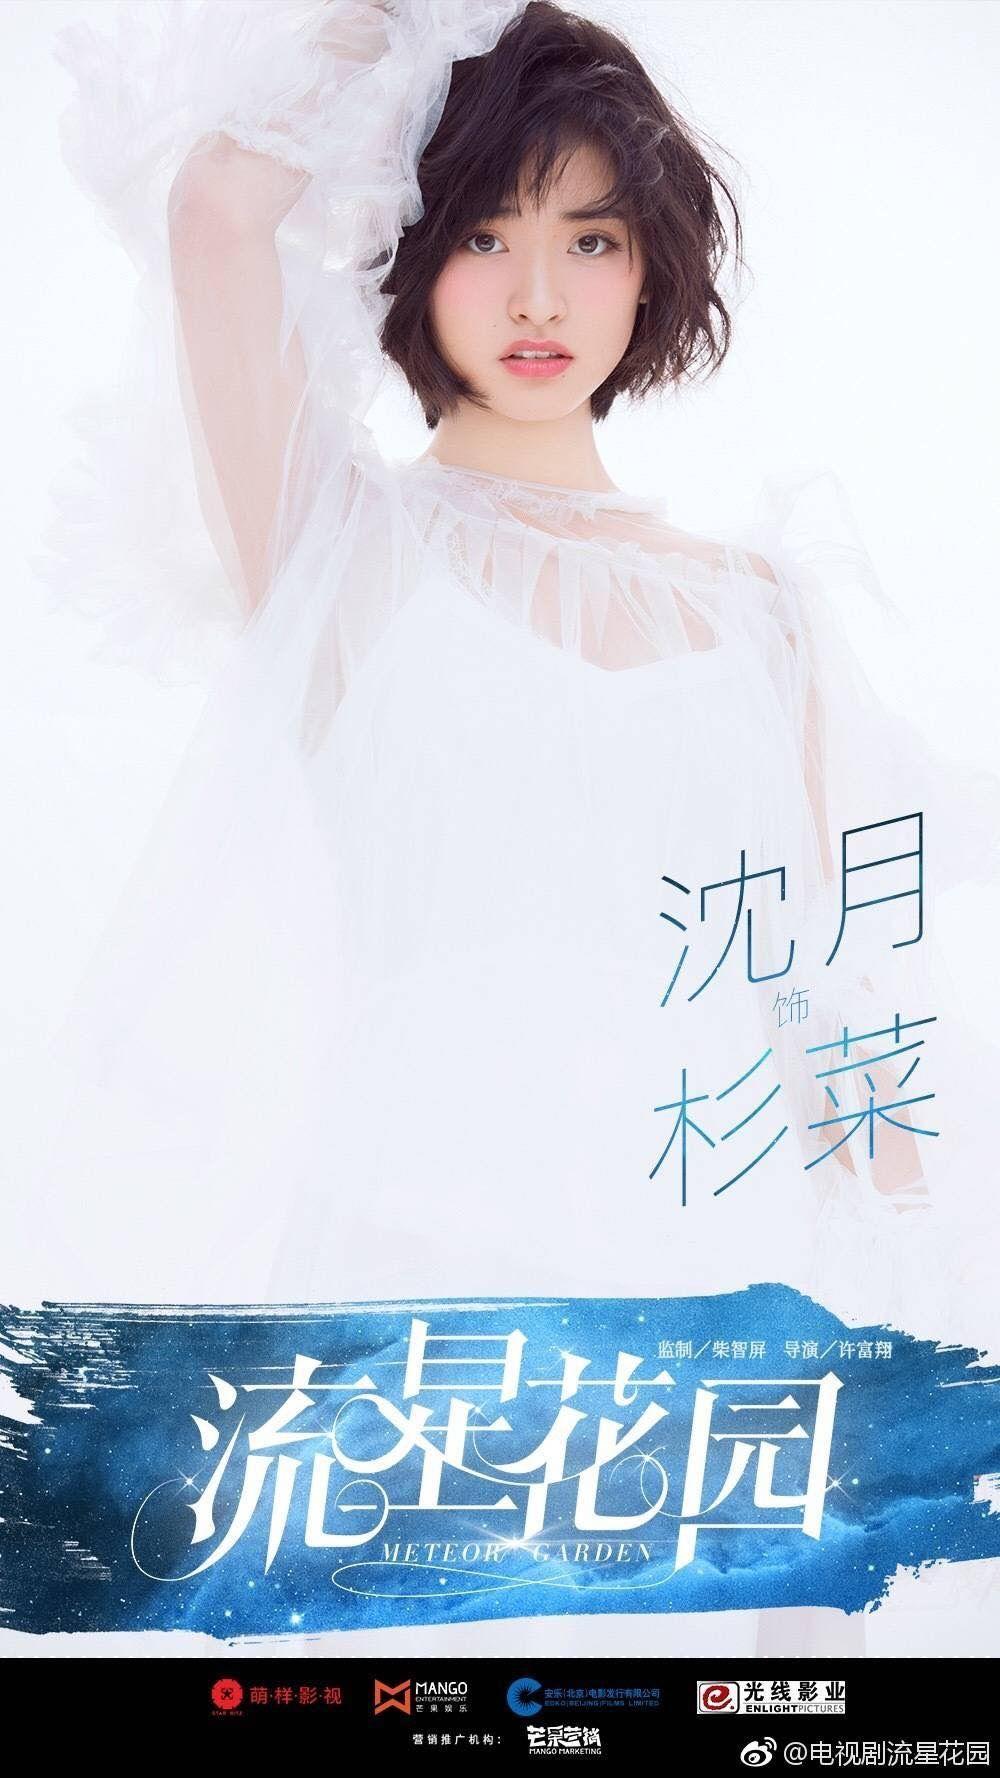 Upcoming drama: Meteor Garden 2018 Actress. Shen Yue